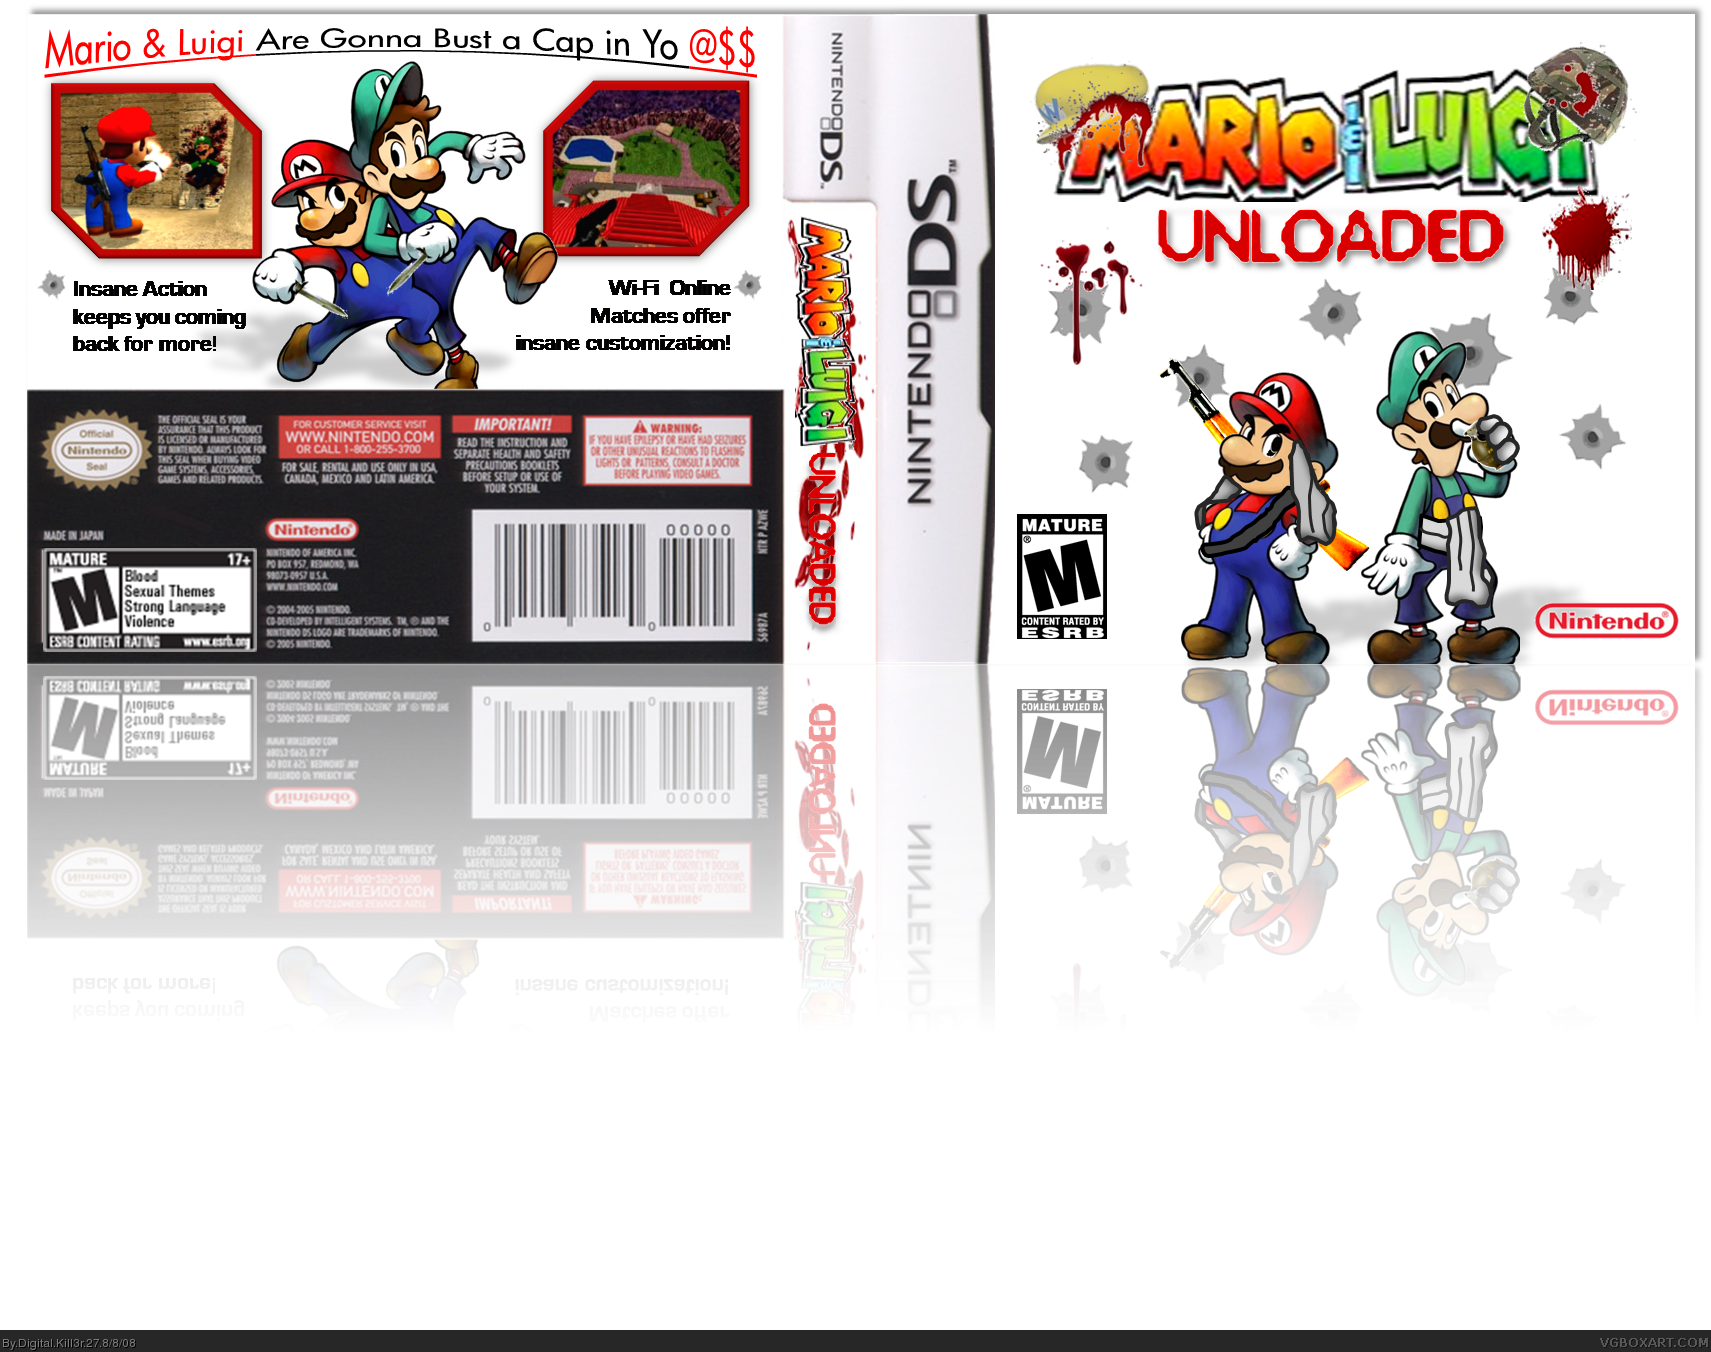 Mario & Luigi UNLOADED box cover